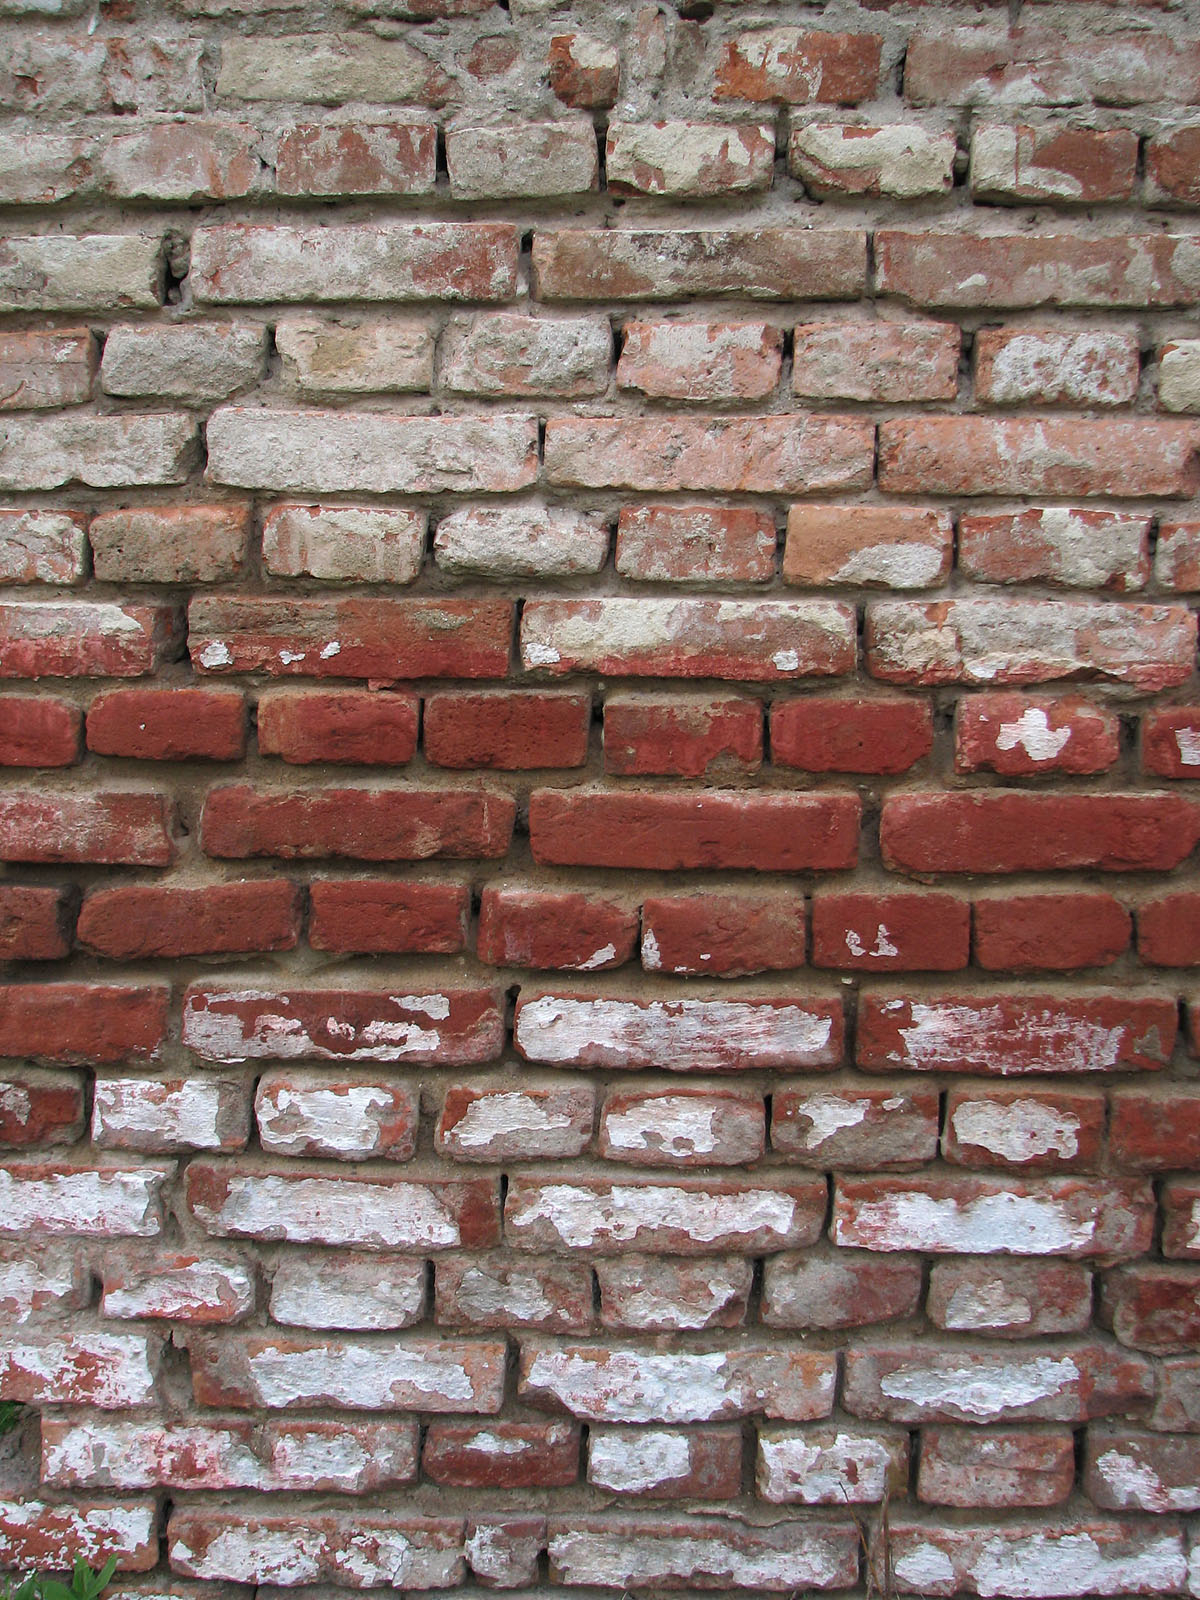 Bricks by Mish-A-Man